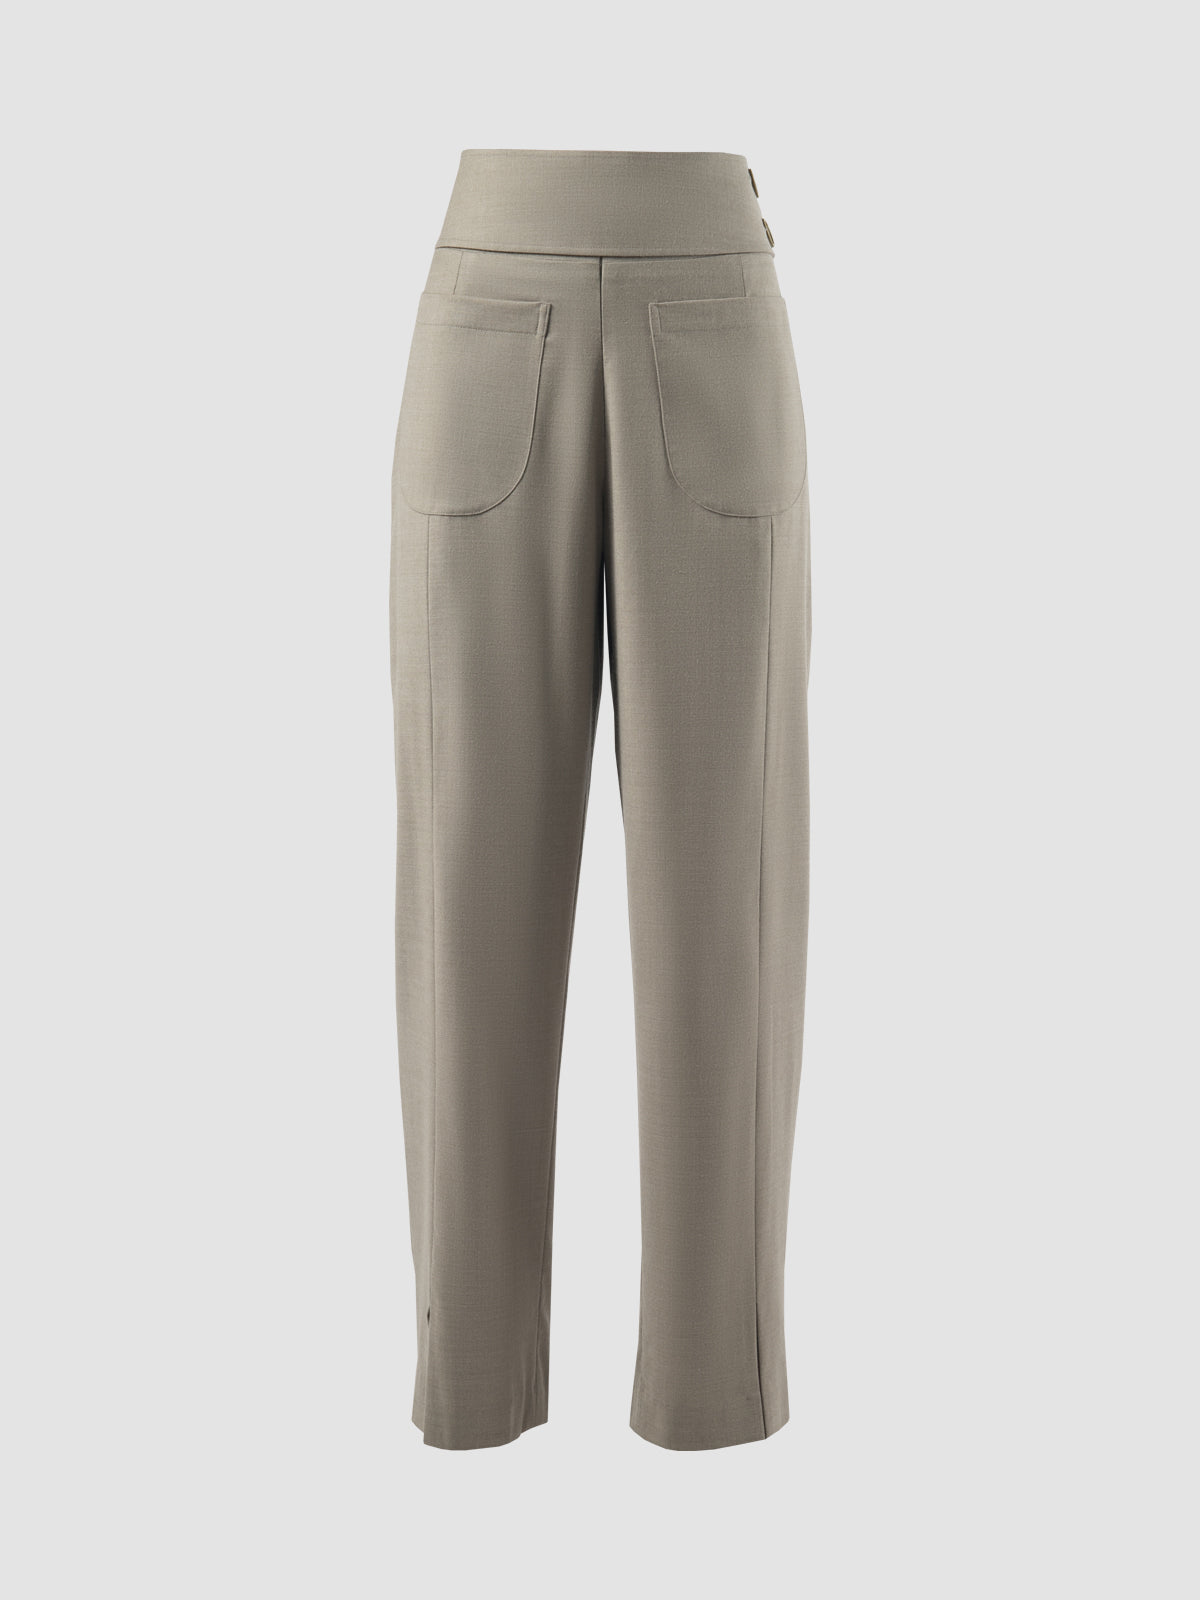 Petal grey straight pants